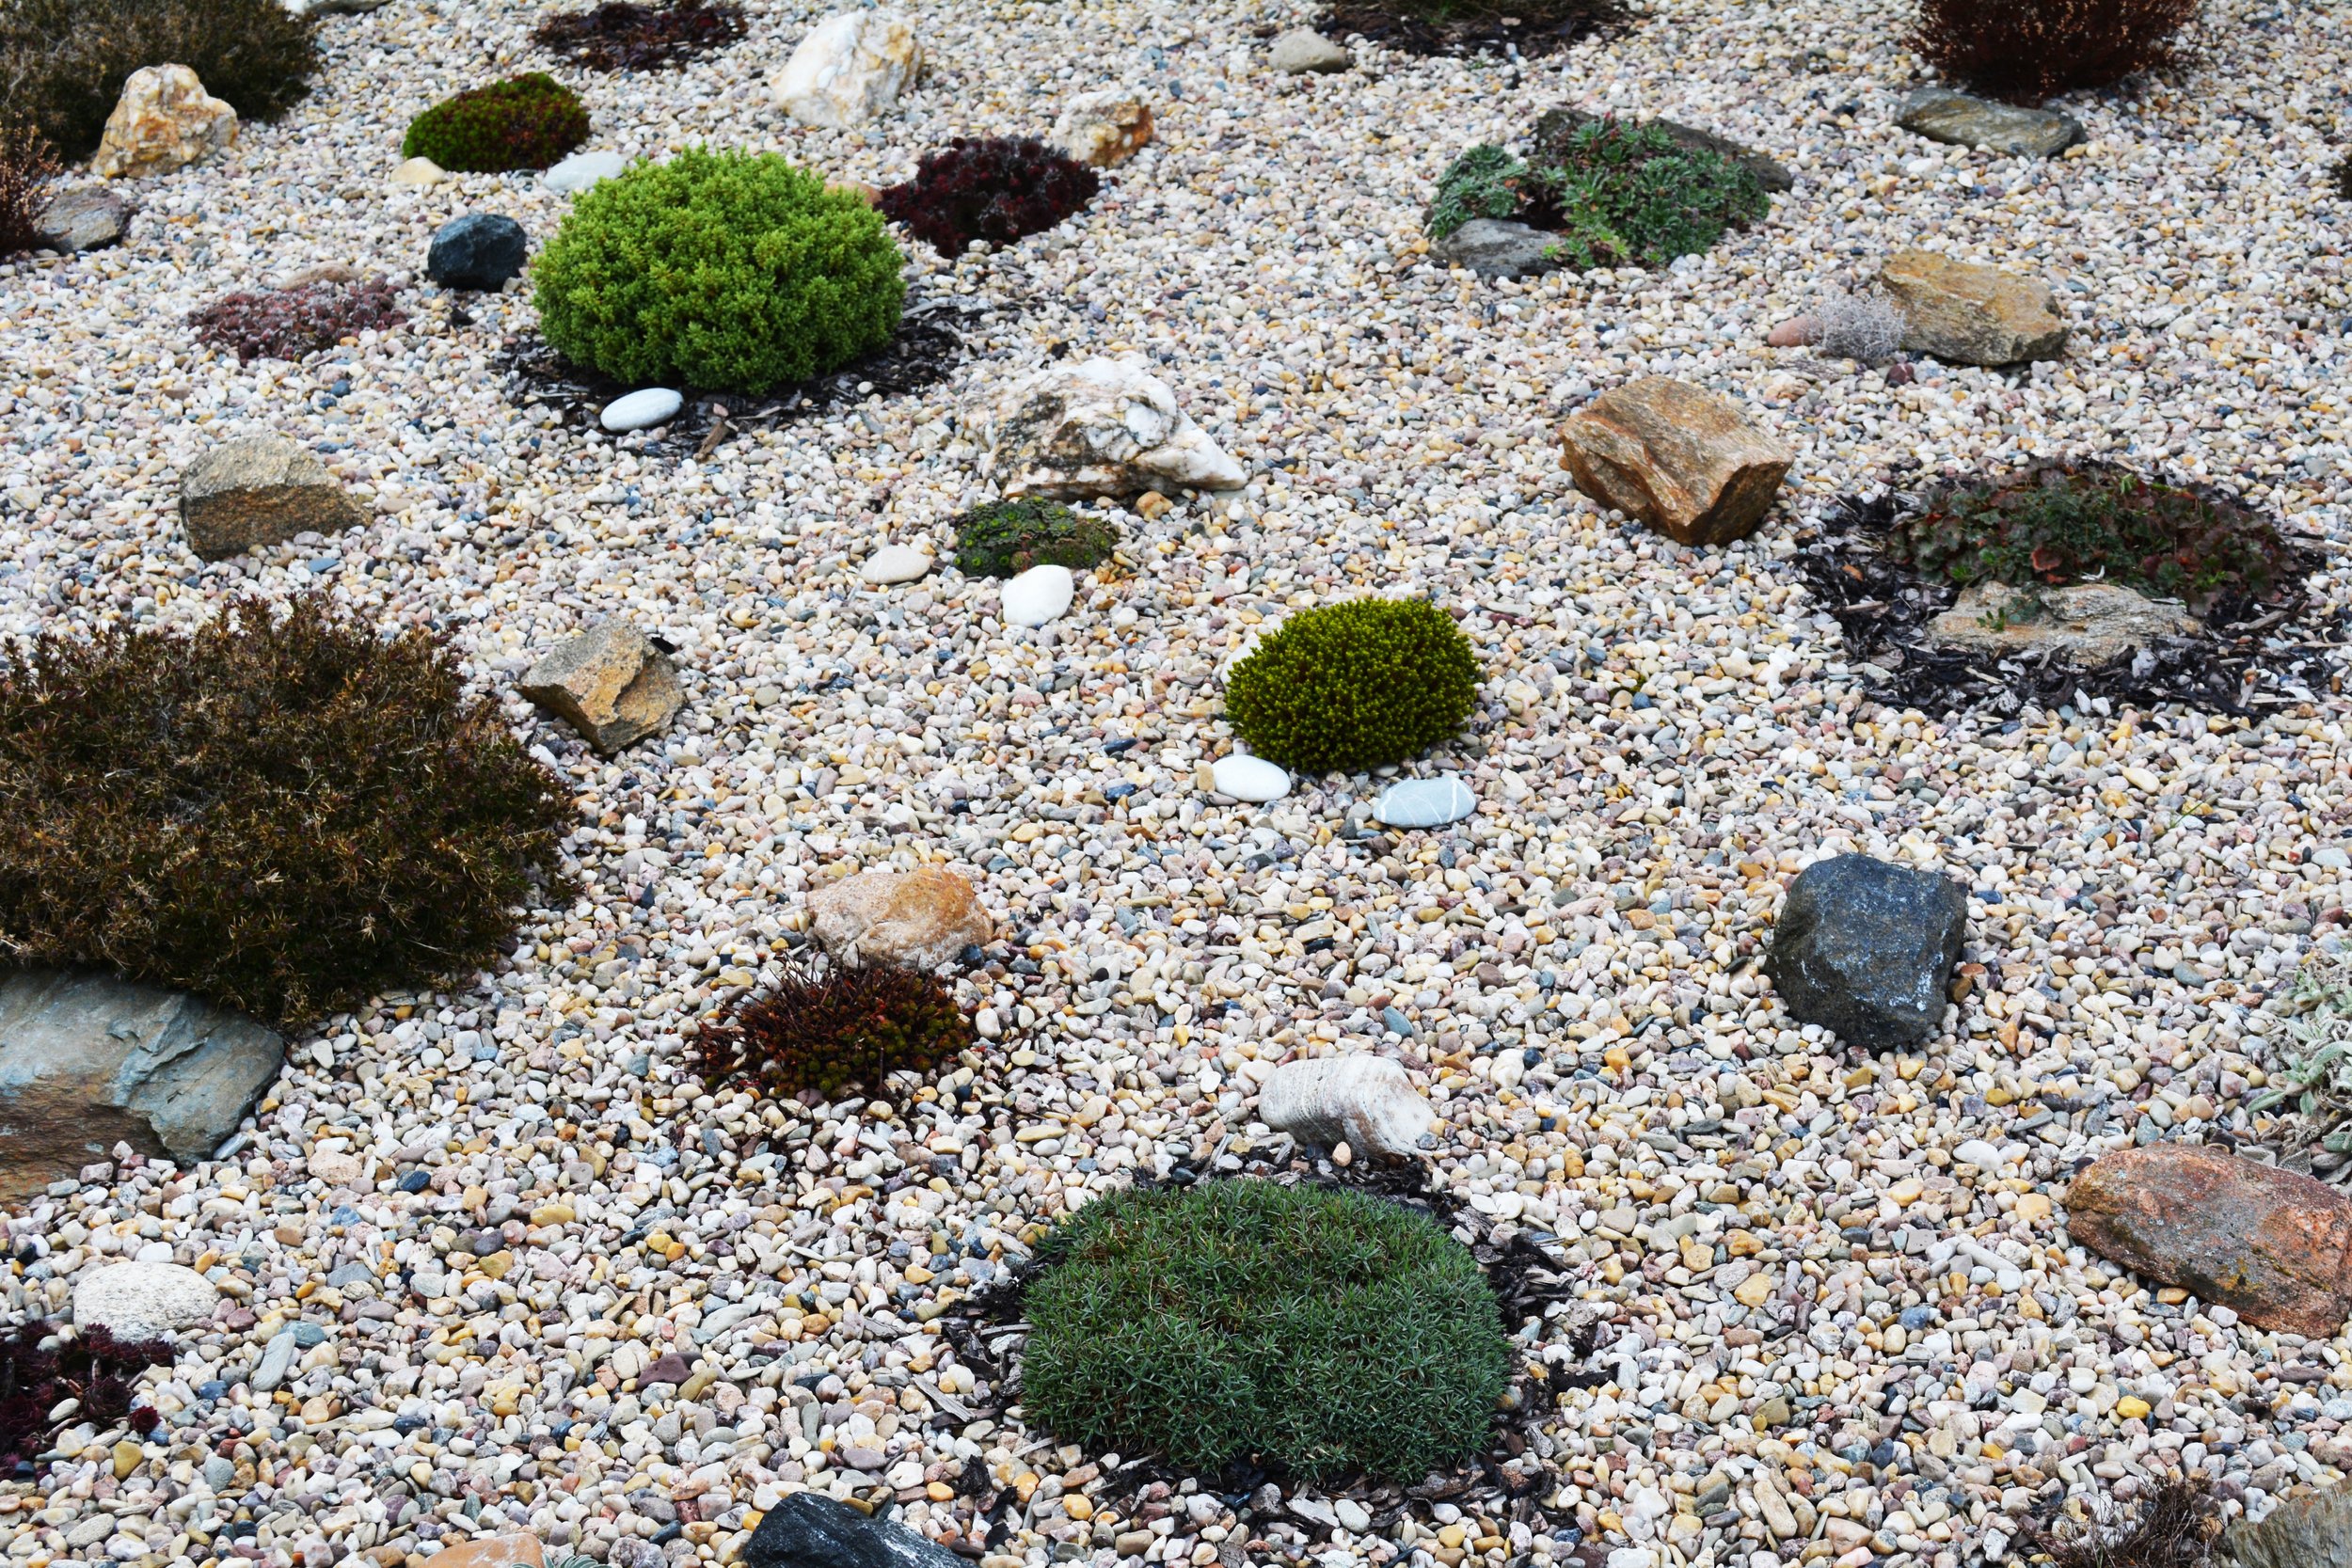 rock-plant-ground-flower-moss-decoration-851089-pxhere.com.jpg